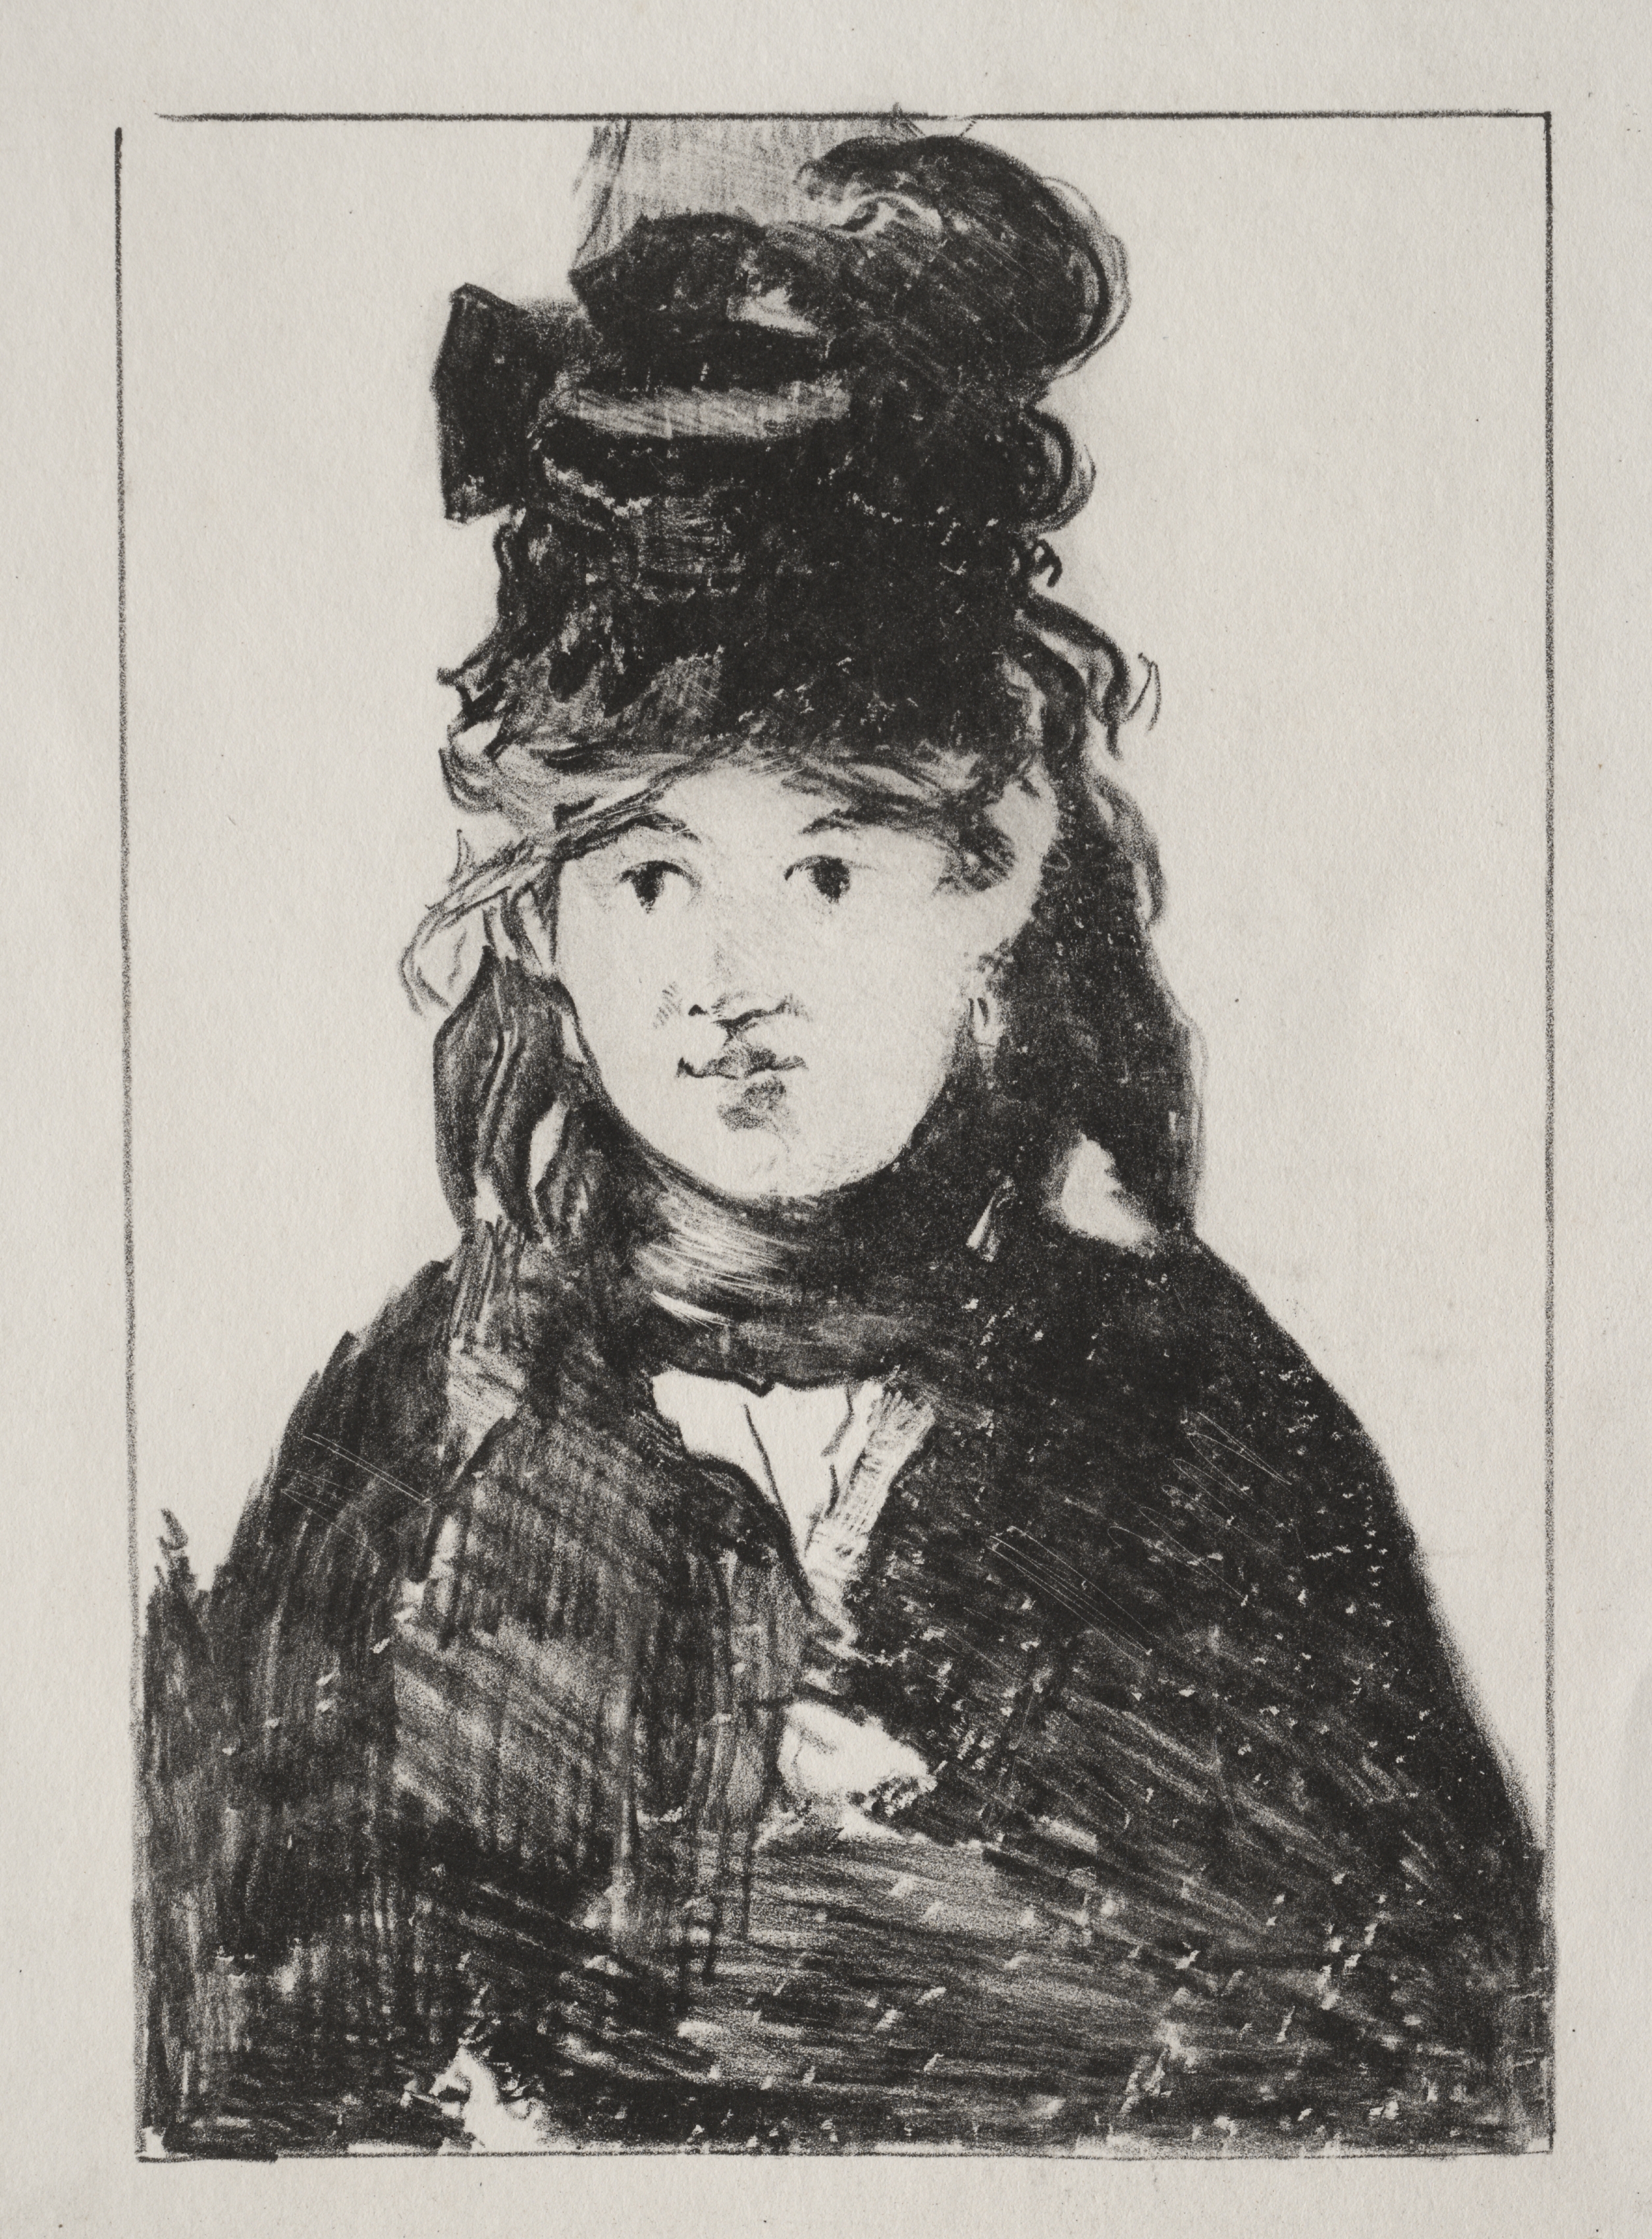 Portrait of Berthe Morisot